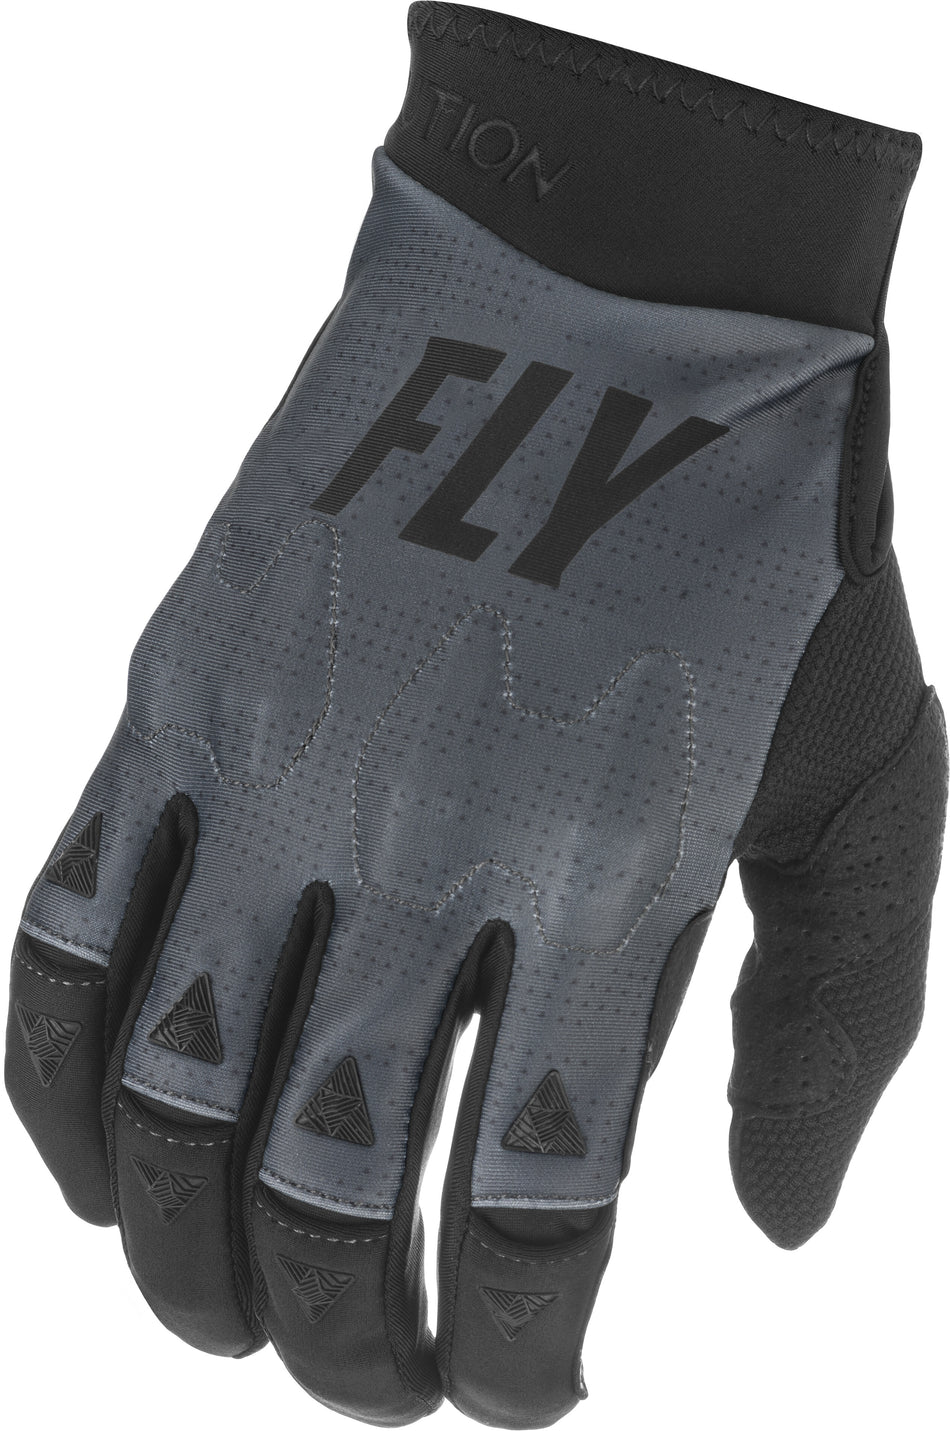 FLY RACING Evolution Dst Gloves Grey/Black/Stone Sz 13 374-11613